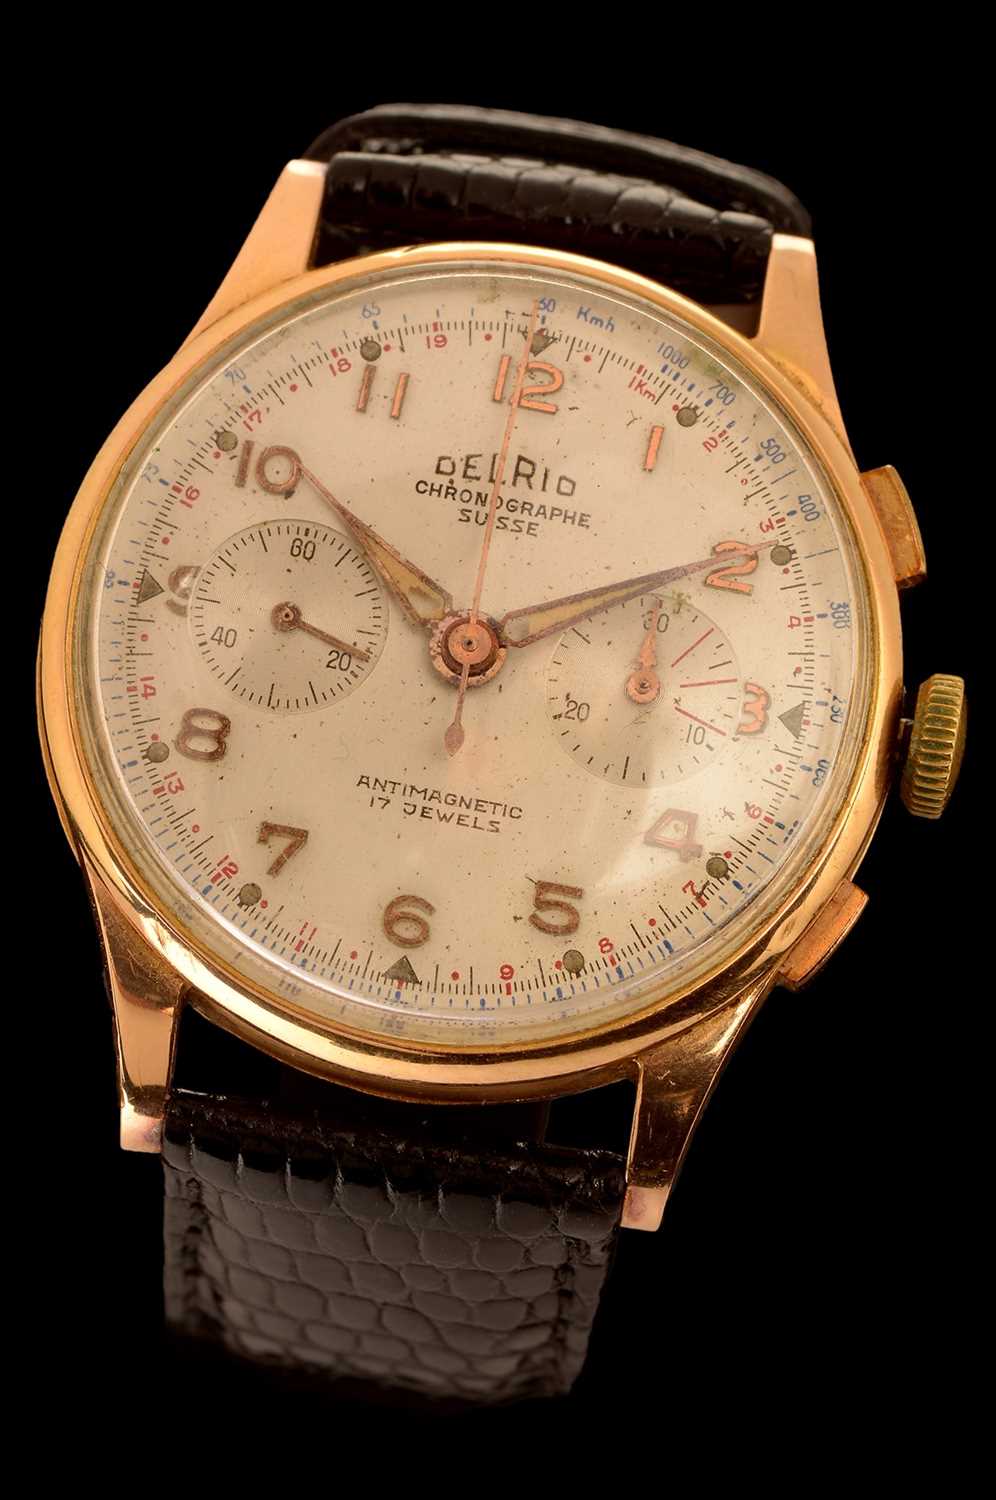 Lot 22 - Delrio Chronographe Suisse: a gentleman's 18k chronograph wristwatch